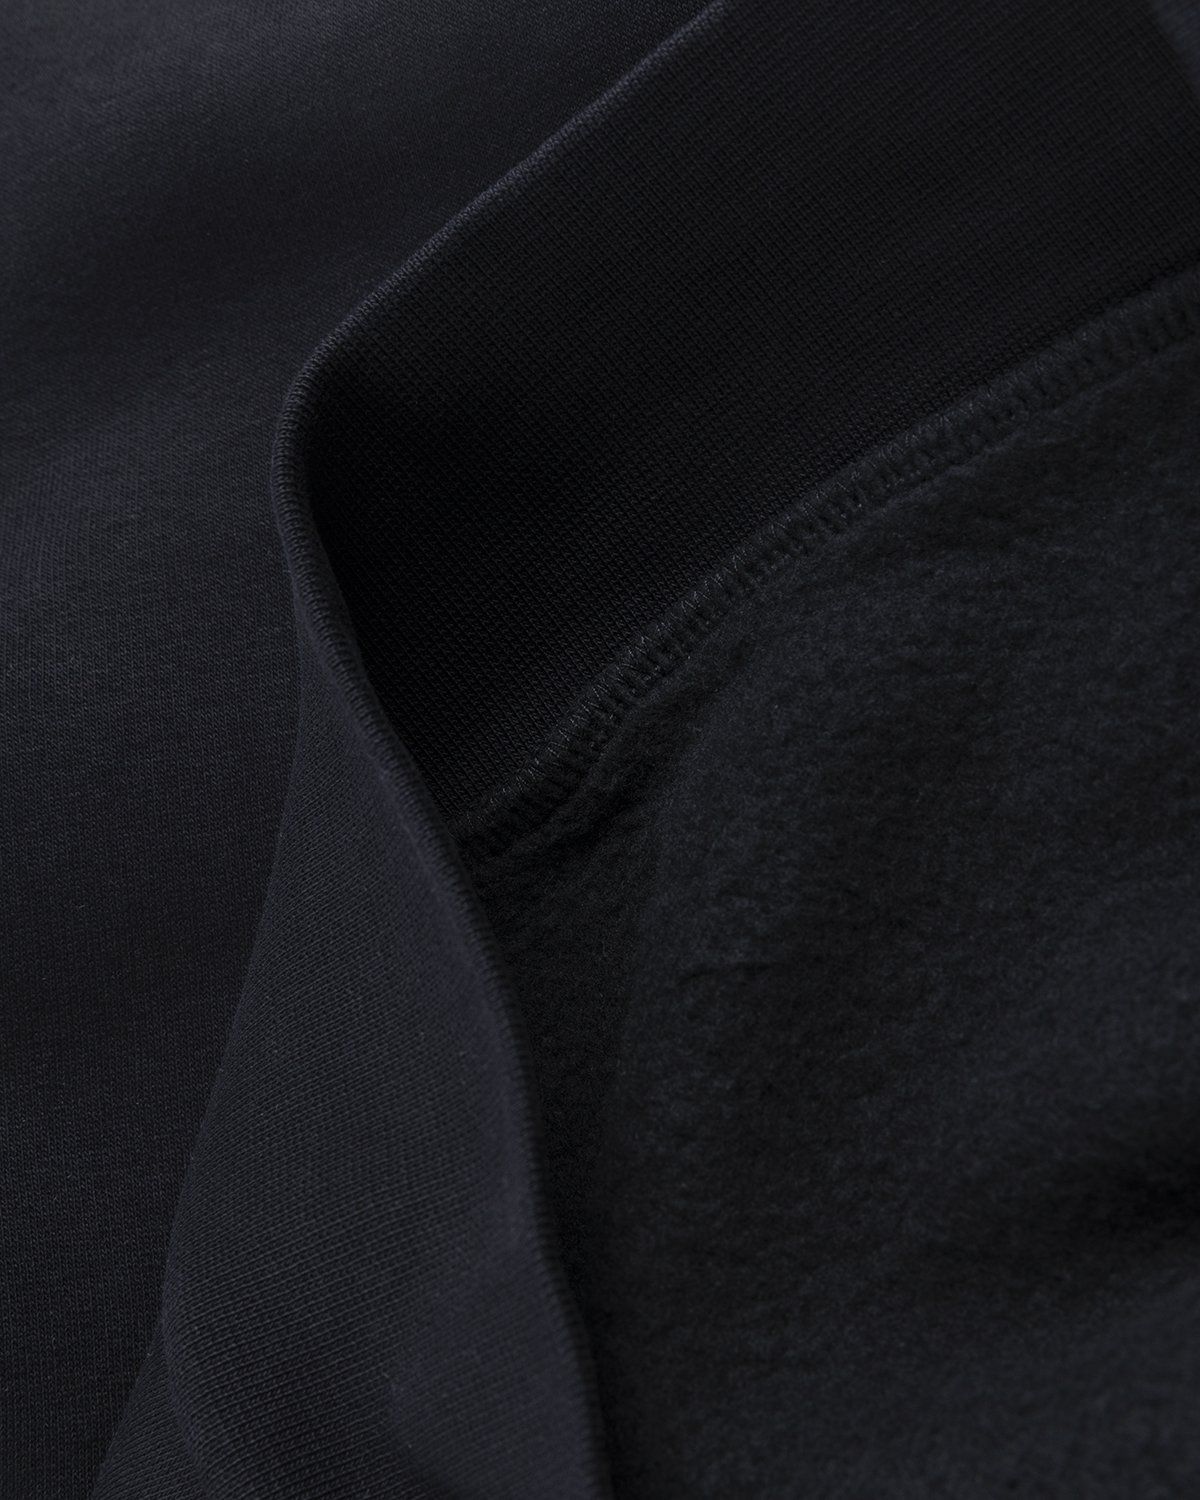 Acne Studios – Brushed Sweatshirt Black - Sweatshirts - Black - Image 3